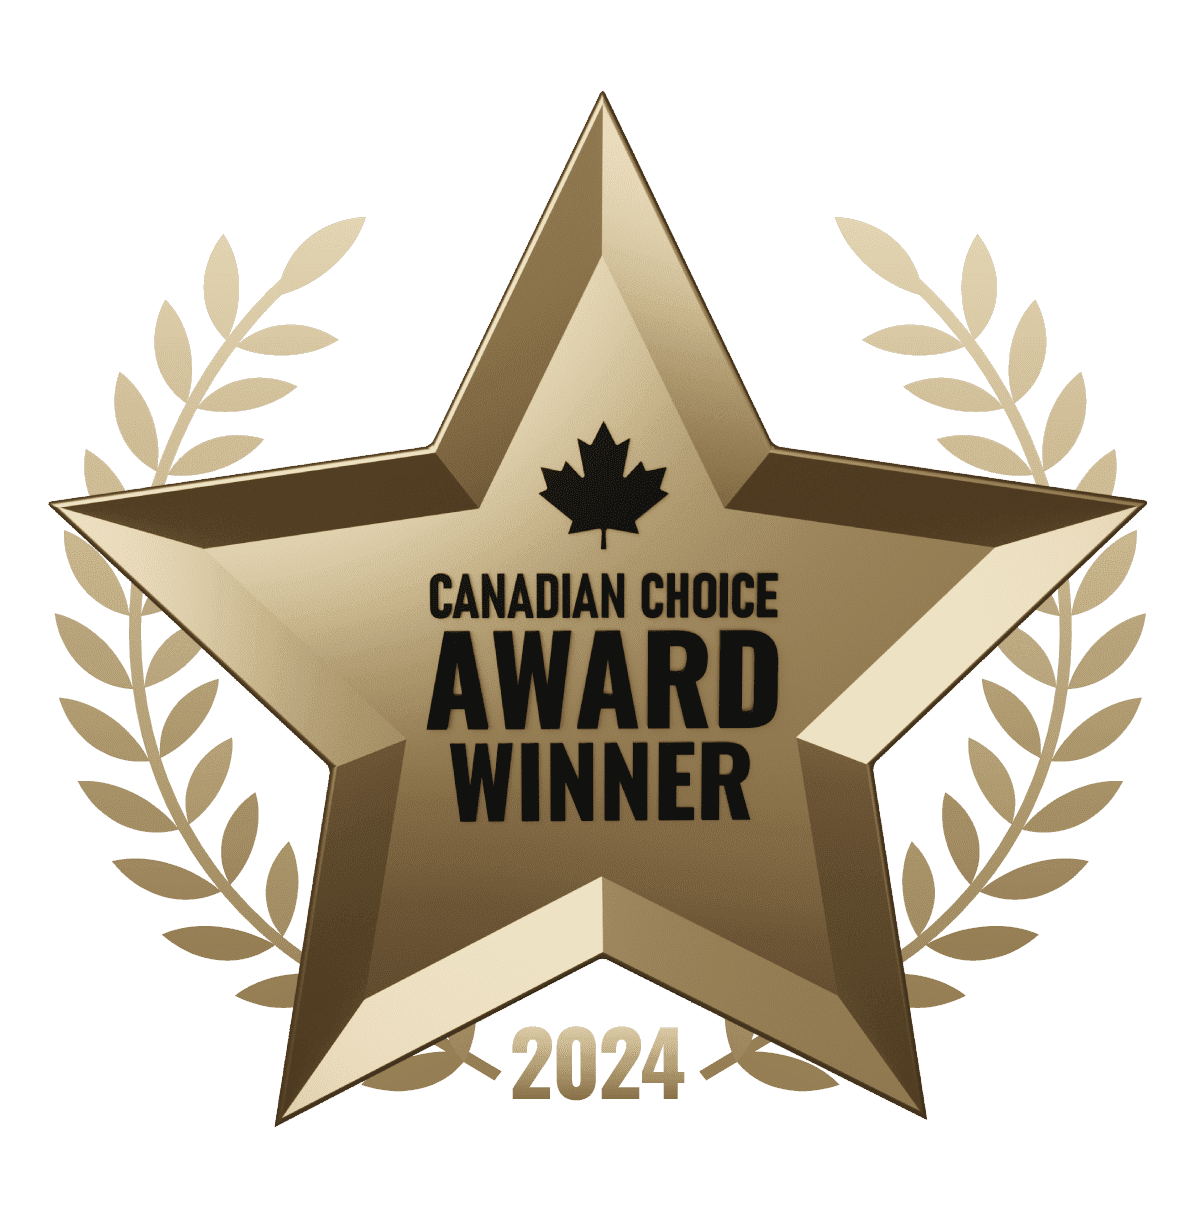 Canadian Choice Award Winner